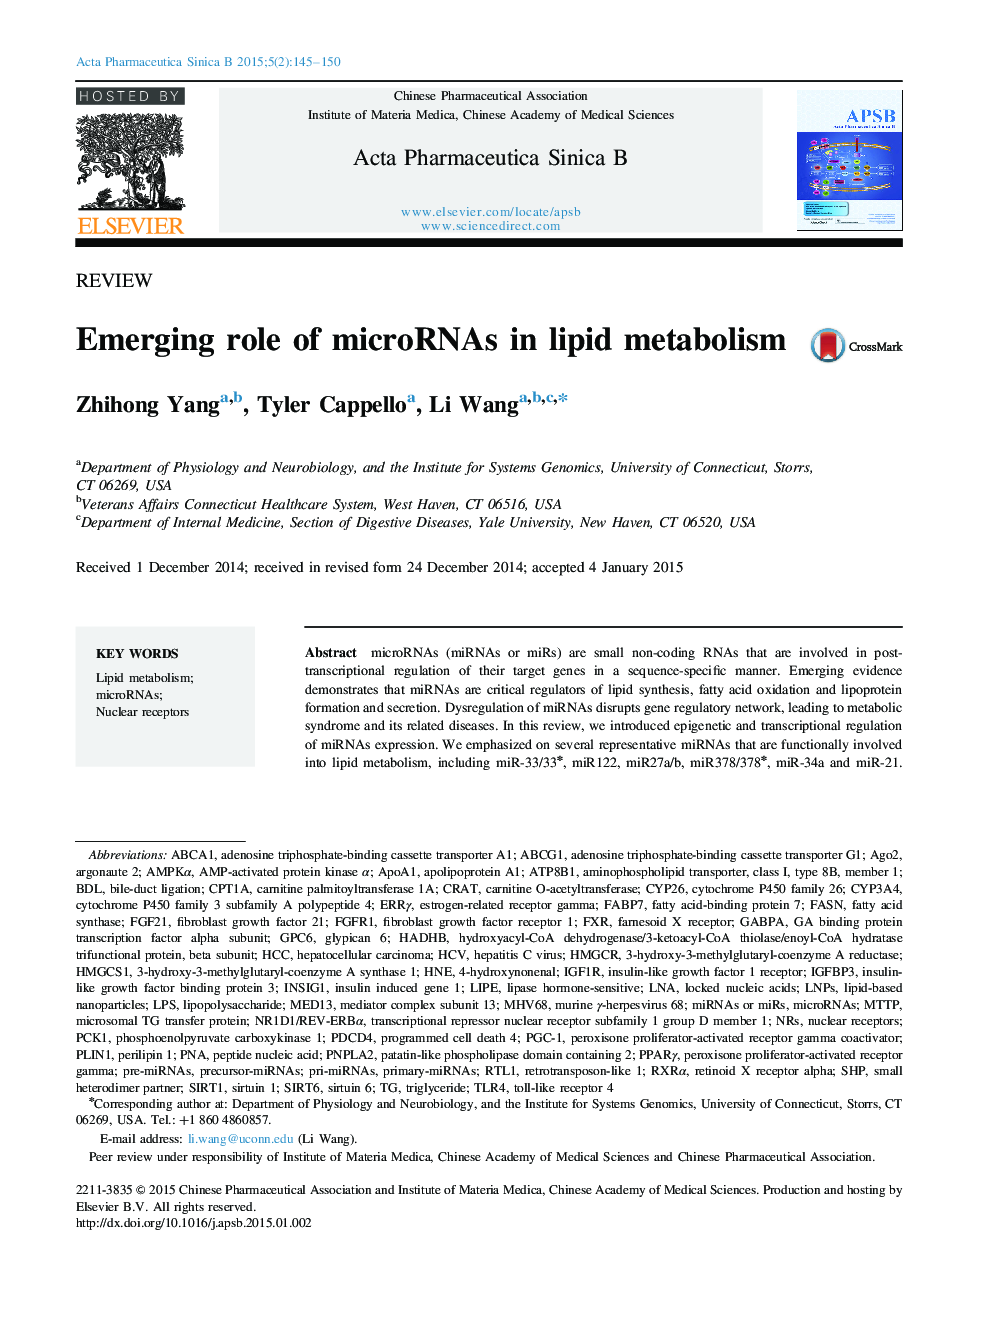 Emerging role of microRNAs in lipid metabolism 